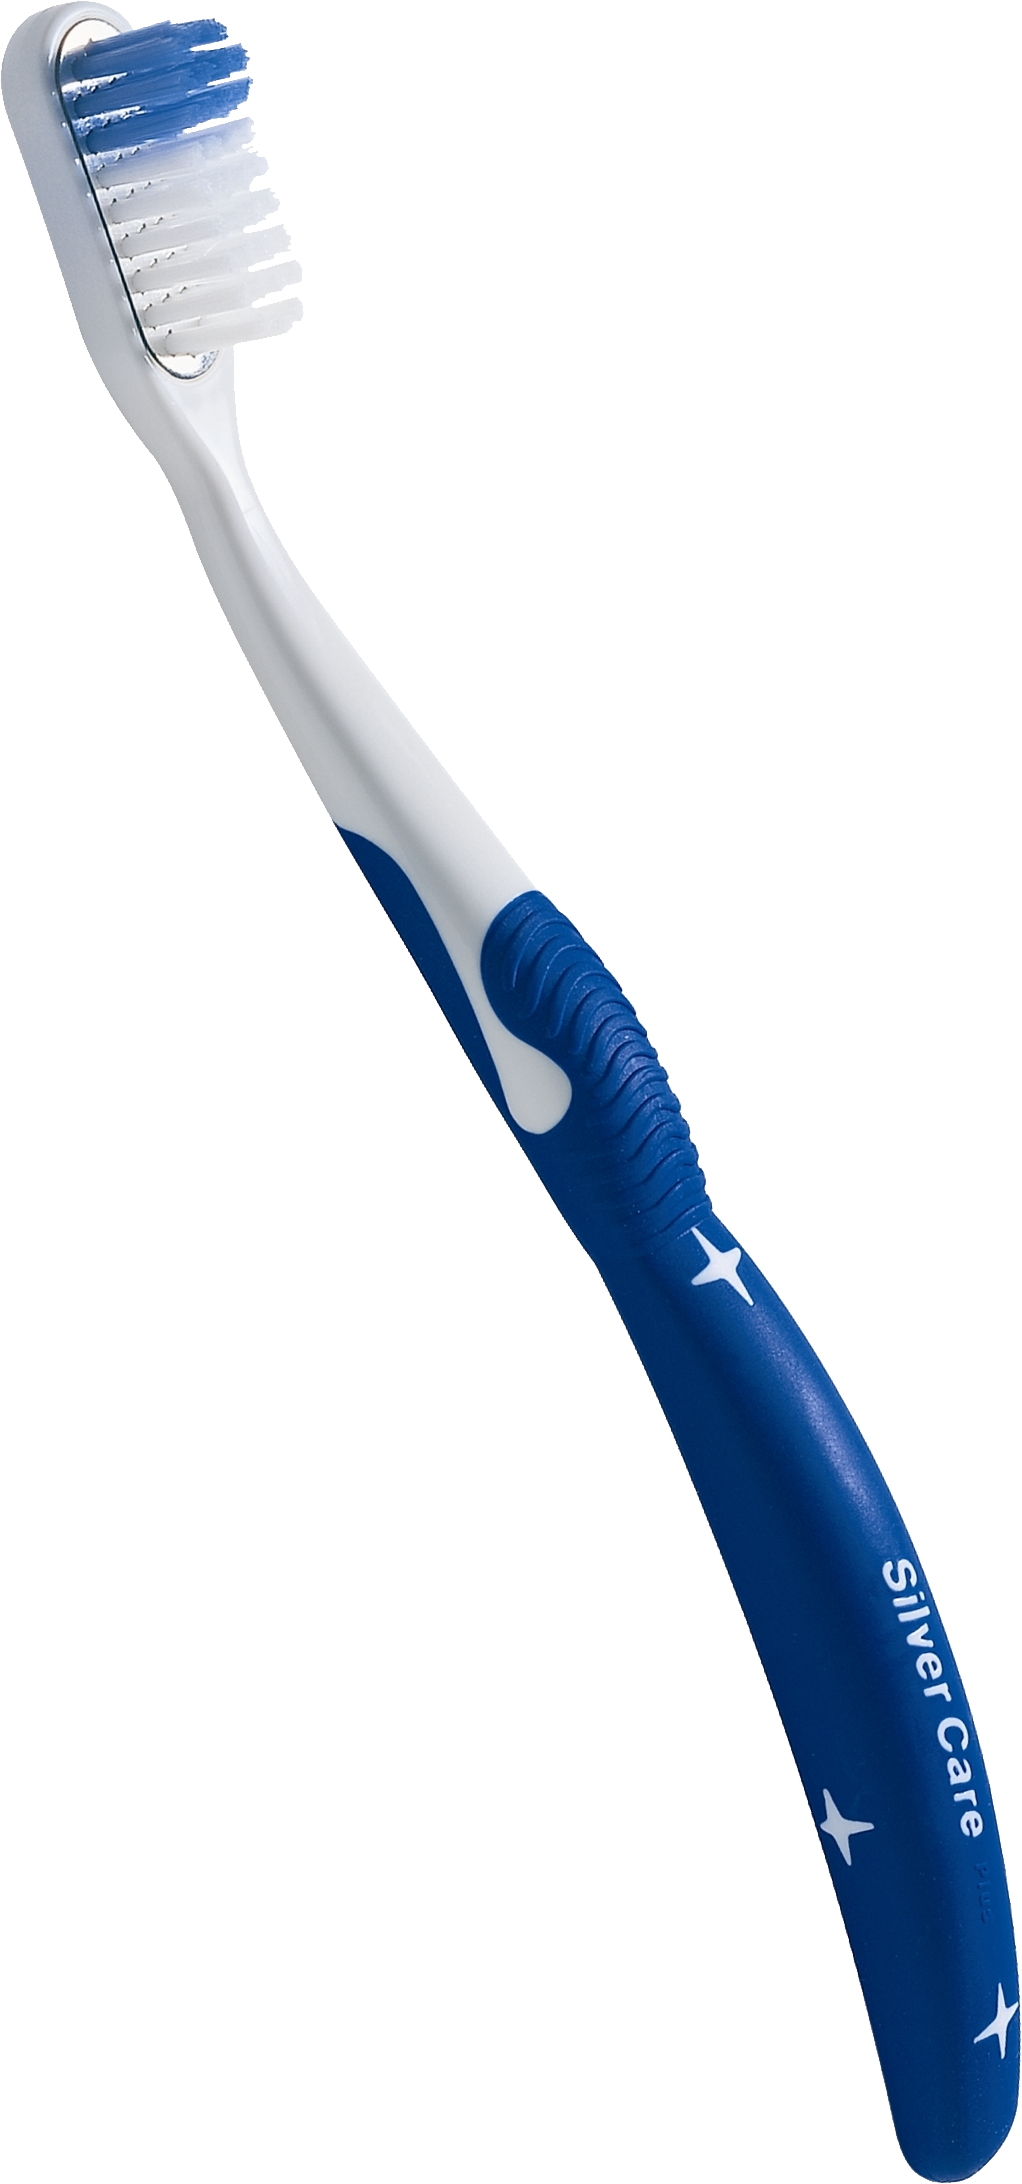 blue white Toothbrush PNG Image.